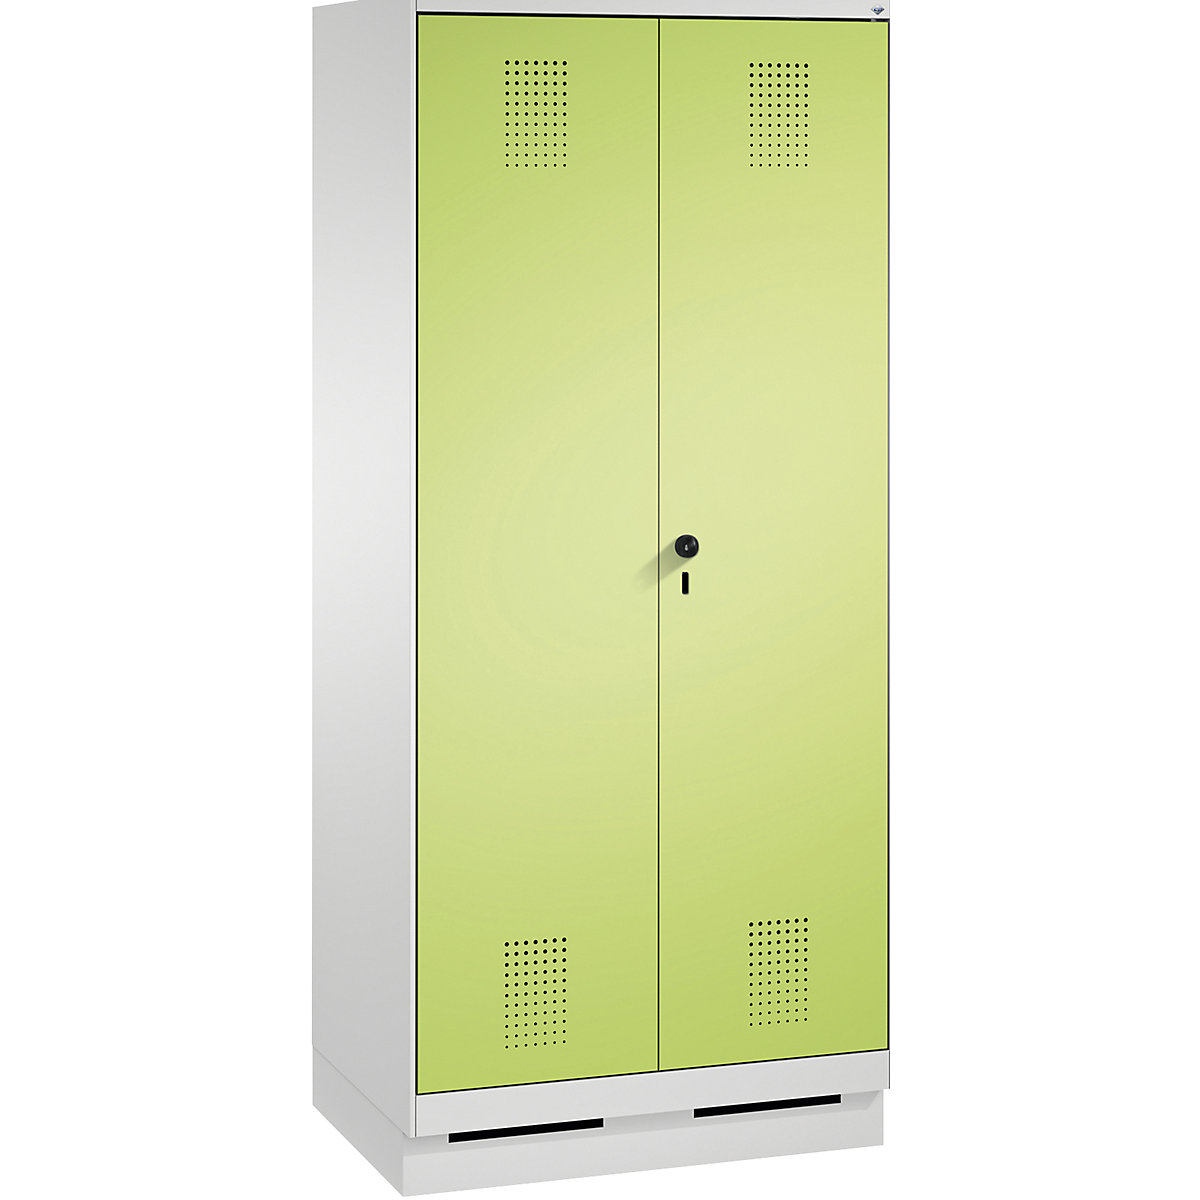 Garderobna omara EVOLO, dvokrilna vrata – C+P, 2 razdelka, širina razdelka 400 mm, s podnožjem, svetlo siva / rumeno zelena-3